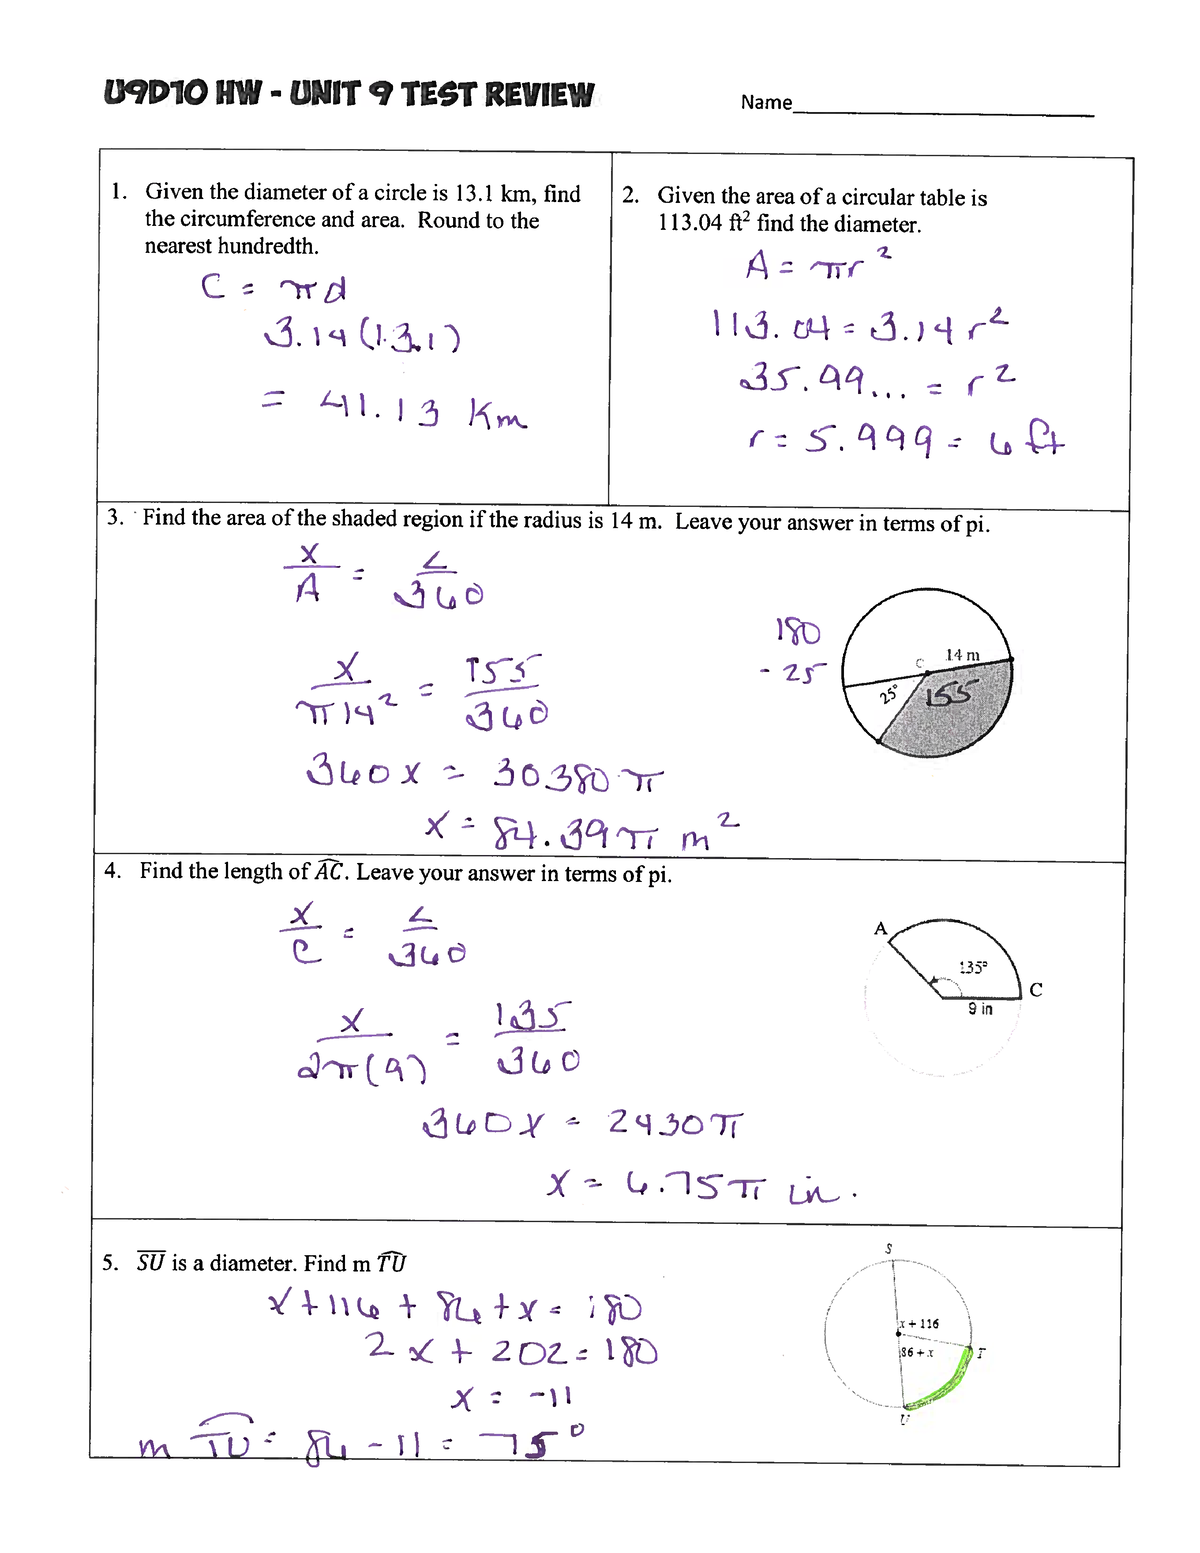 geometry unit 9 lesson 8 homework answer key